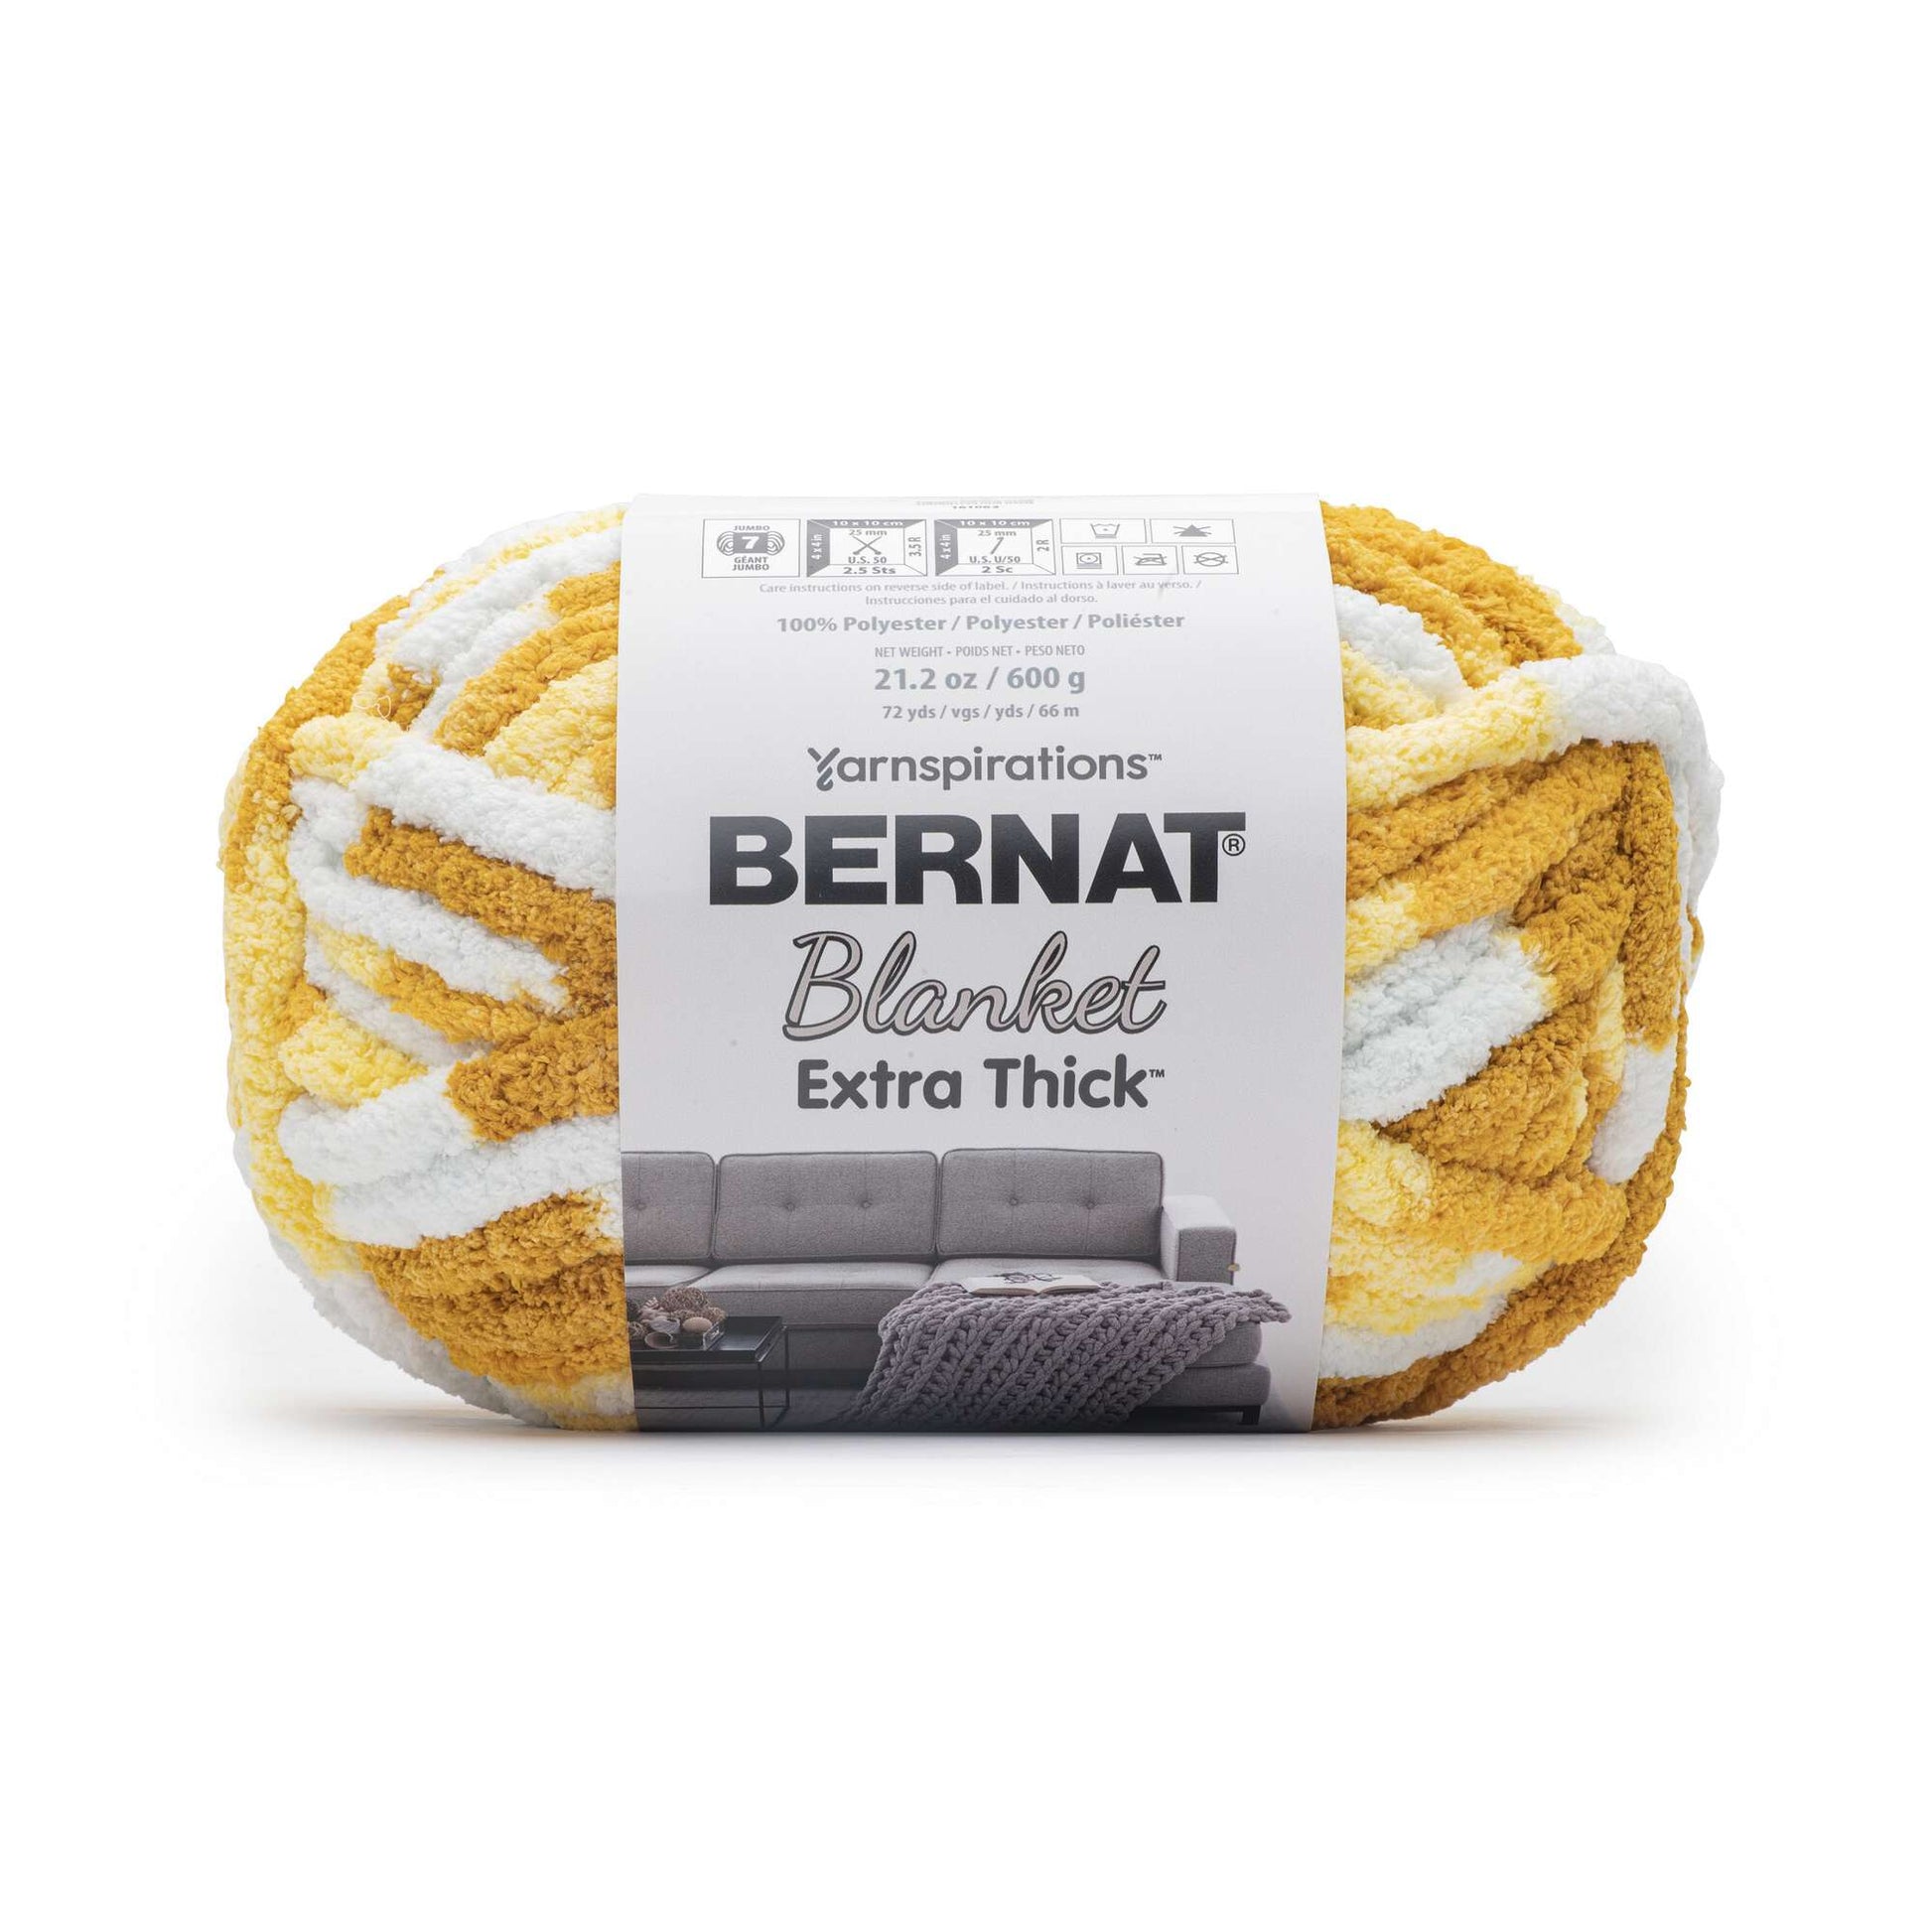 Bernat Blanket Extra Thick Yarn (600g/21.2oz) - Discontinued Shades Sunny Days